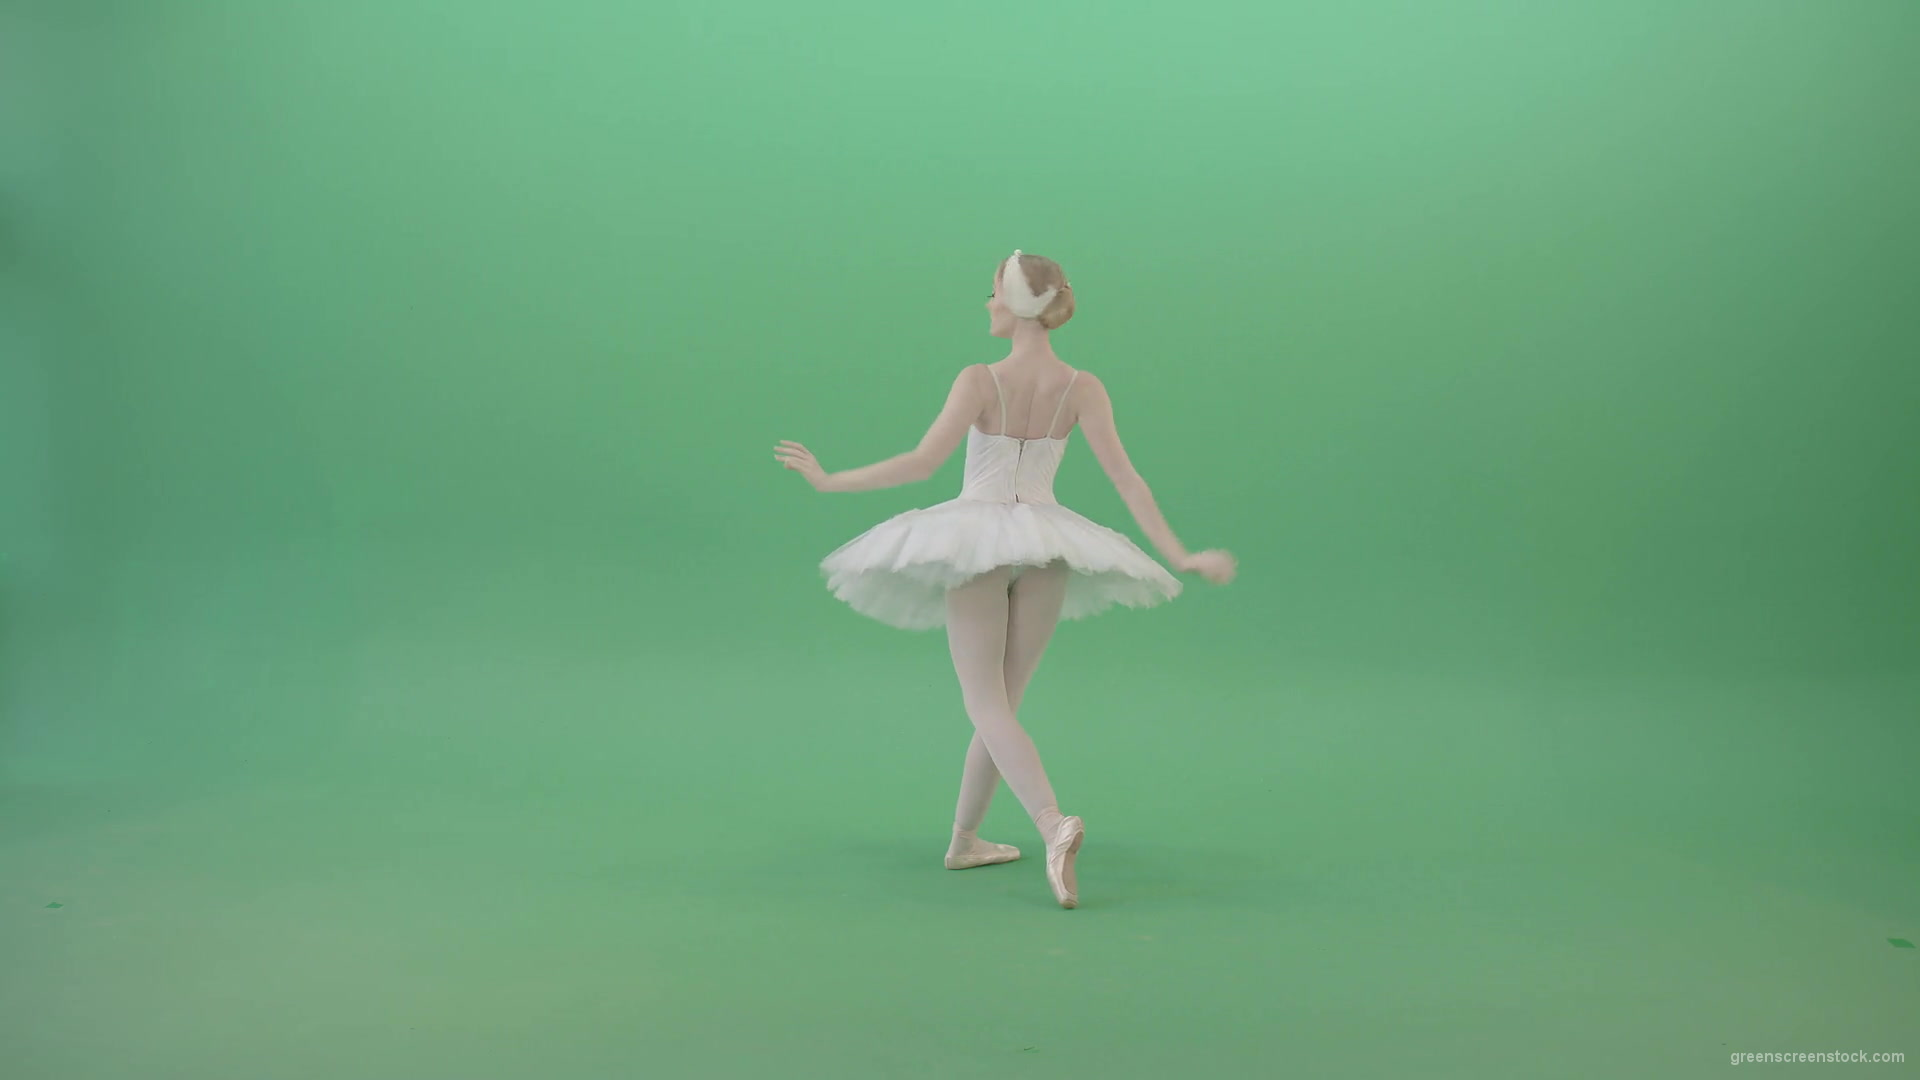 Beautiful-swan-lake-ballet-dance-ballerina-in-back-side-view-dancing-on-green-screen-4K-Video-Footage-1920_009 Green Screen Stock